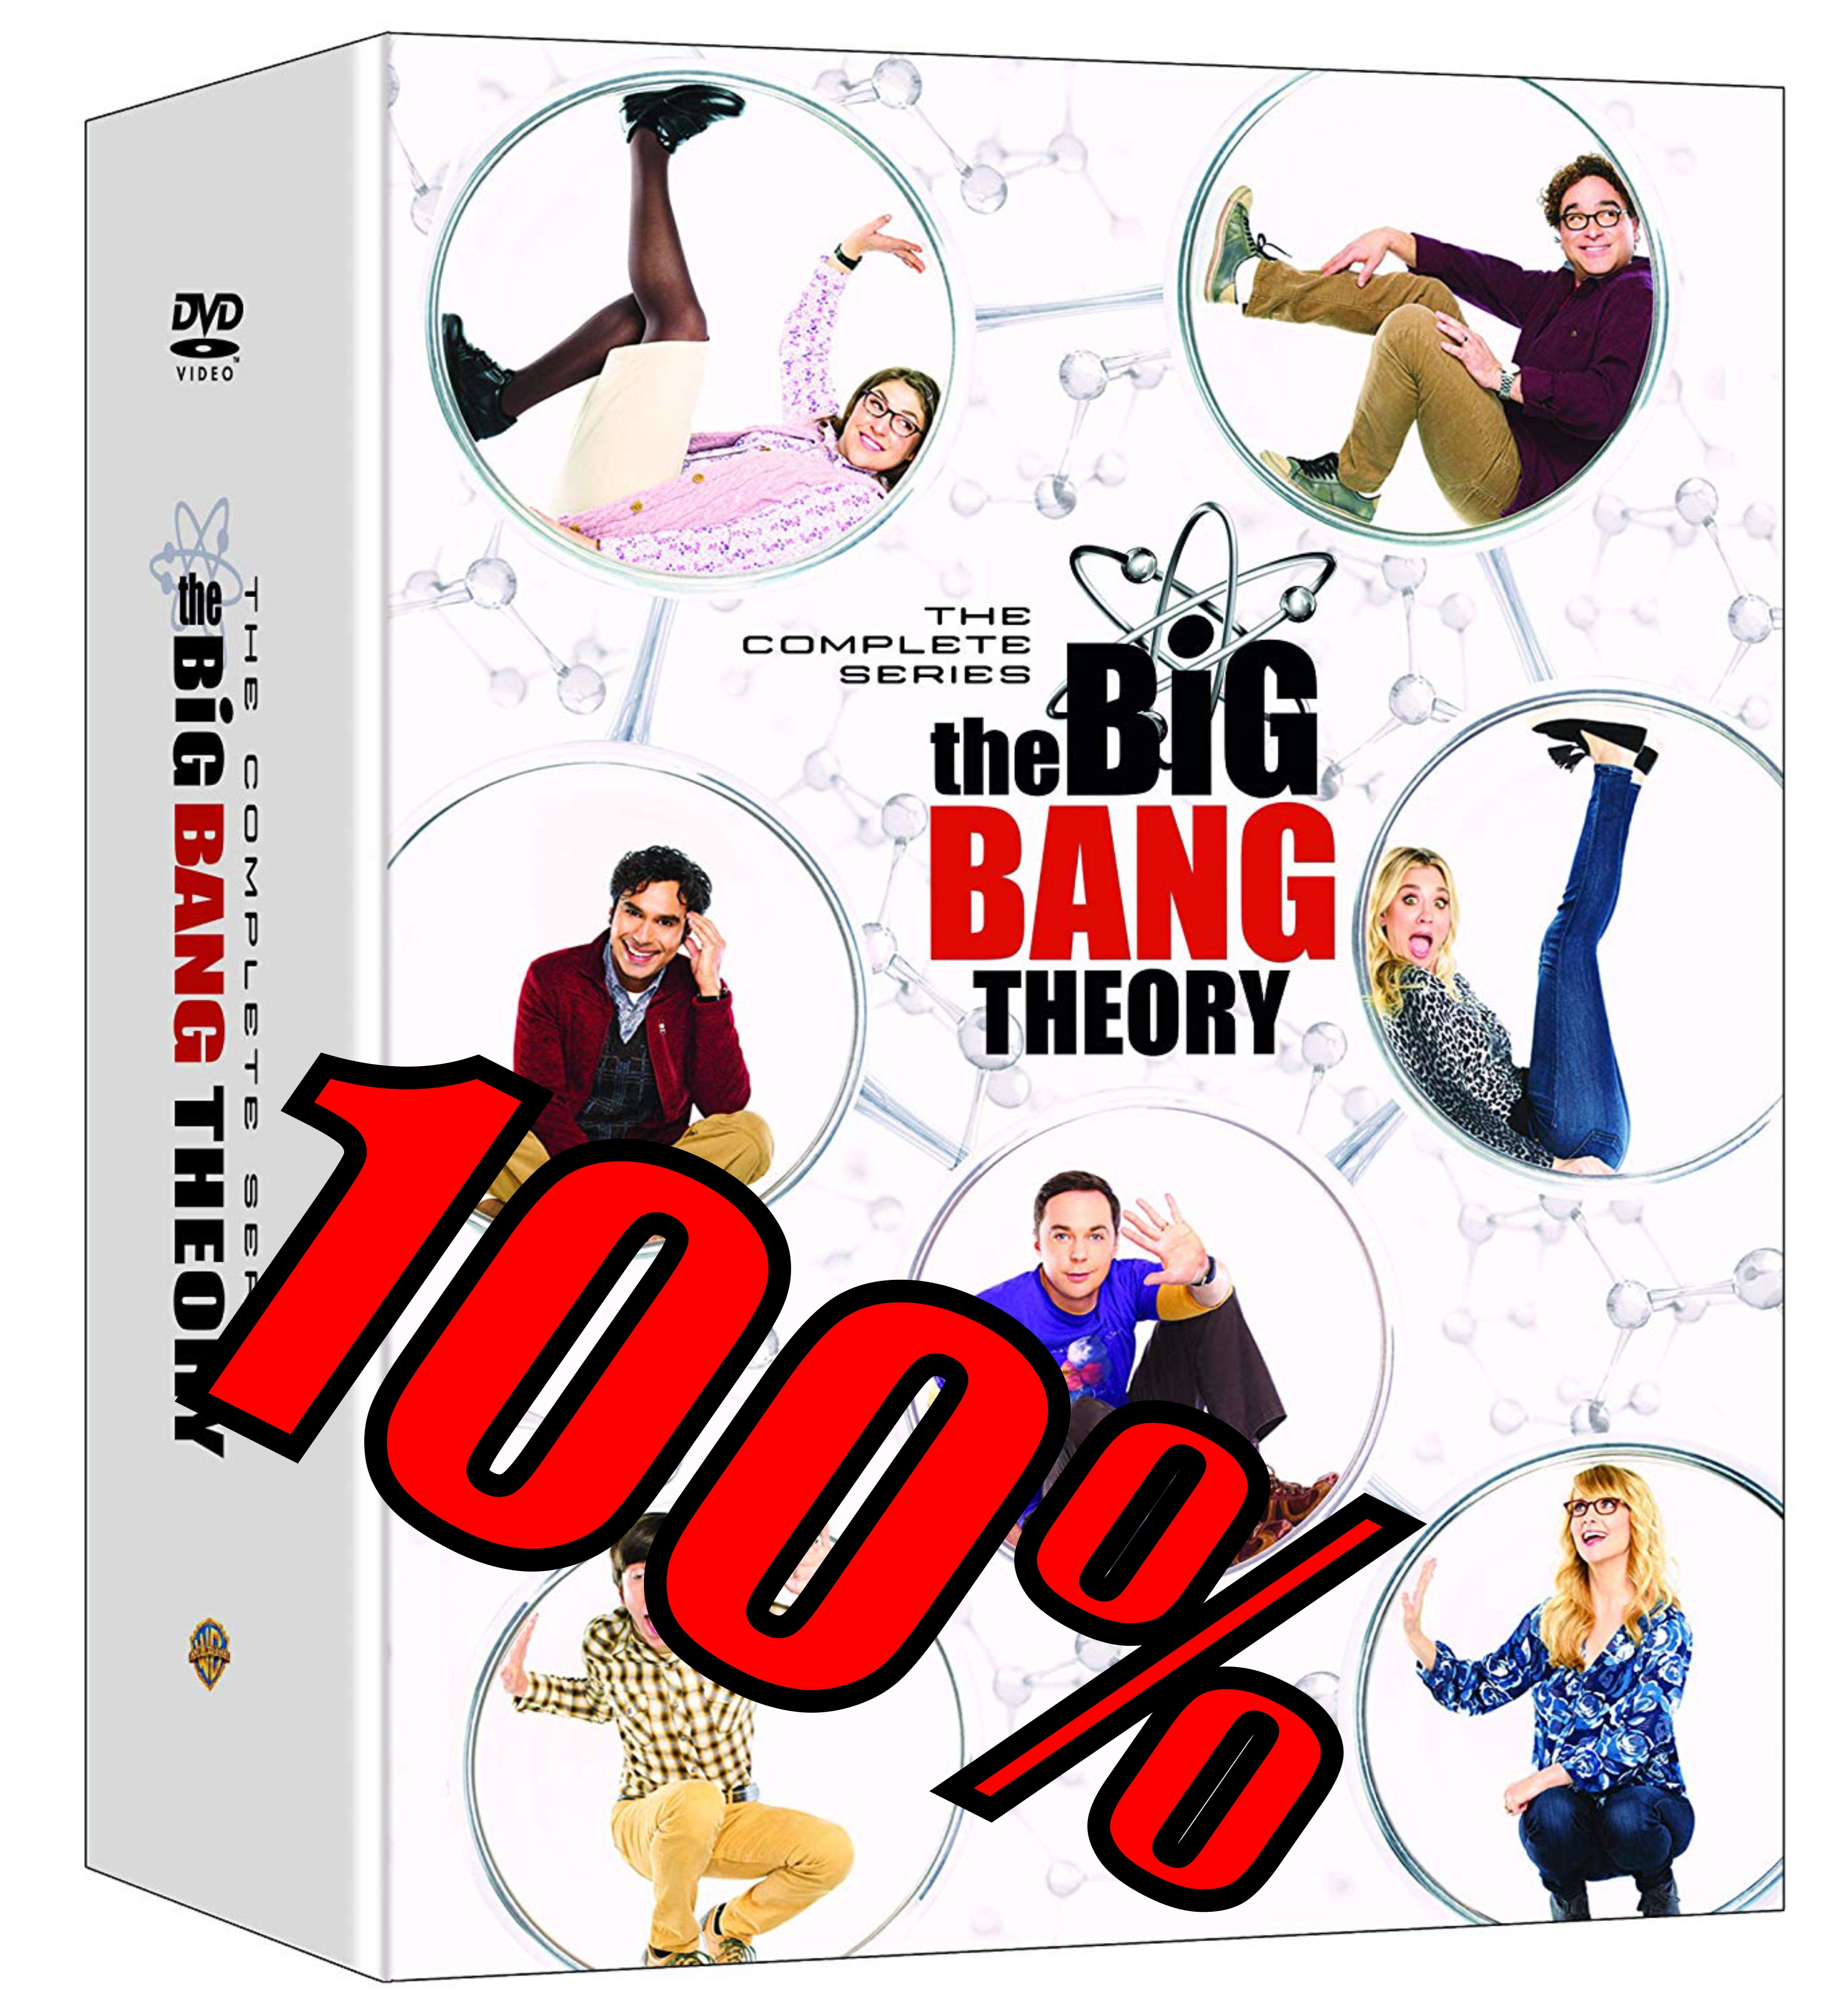 Stiahni si Seriál The Big Bang Theory / Teorie velkeho tresku (Komplet) = CSFD 89%